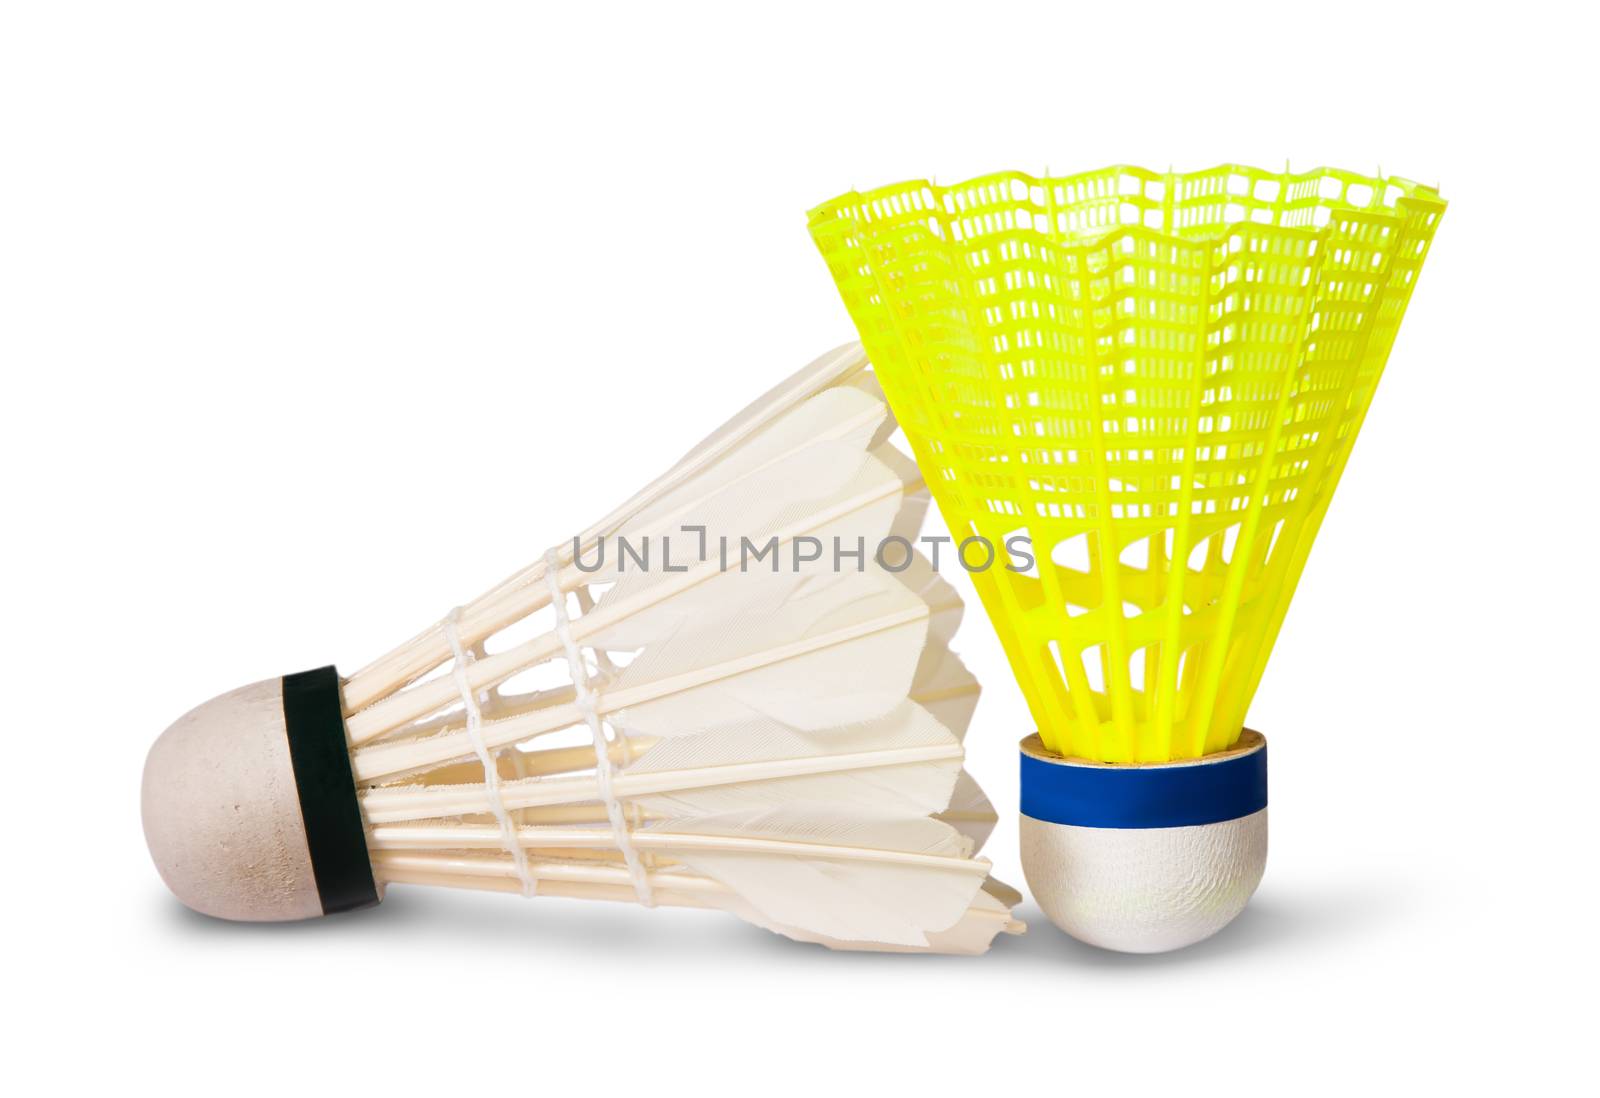 Two badminton shuttlecock by Cipariss